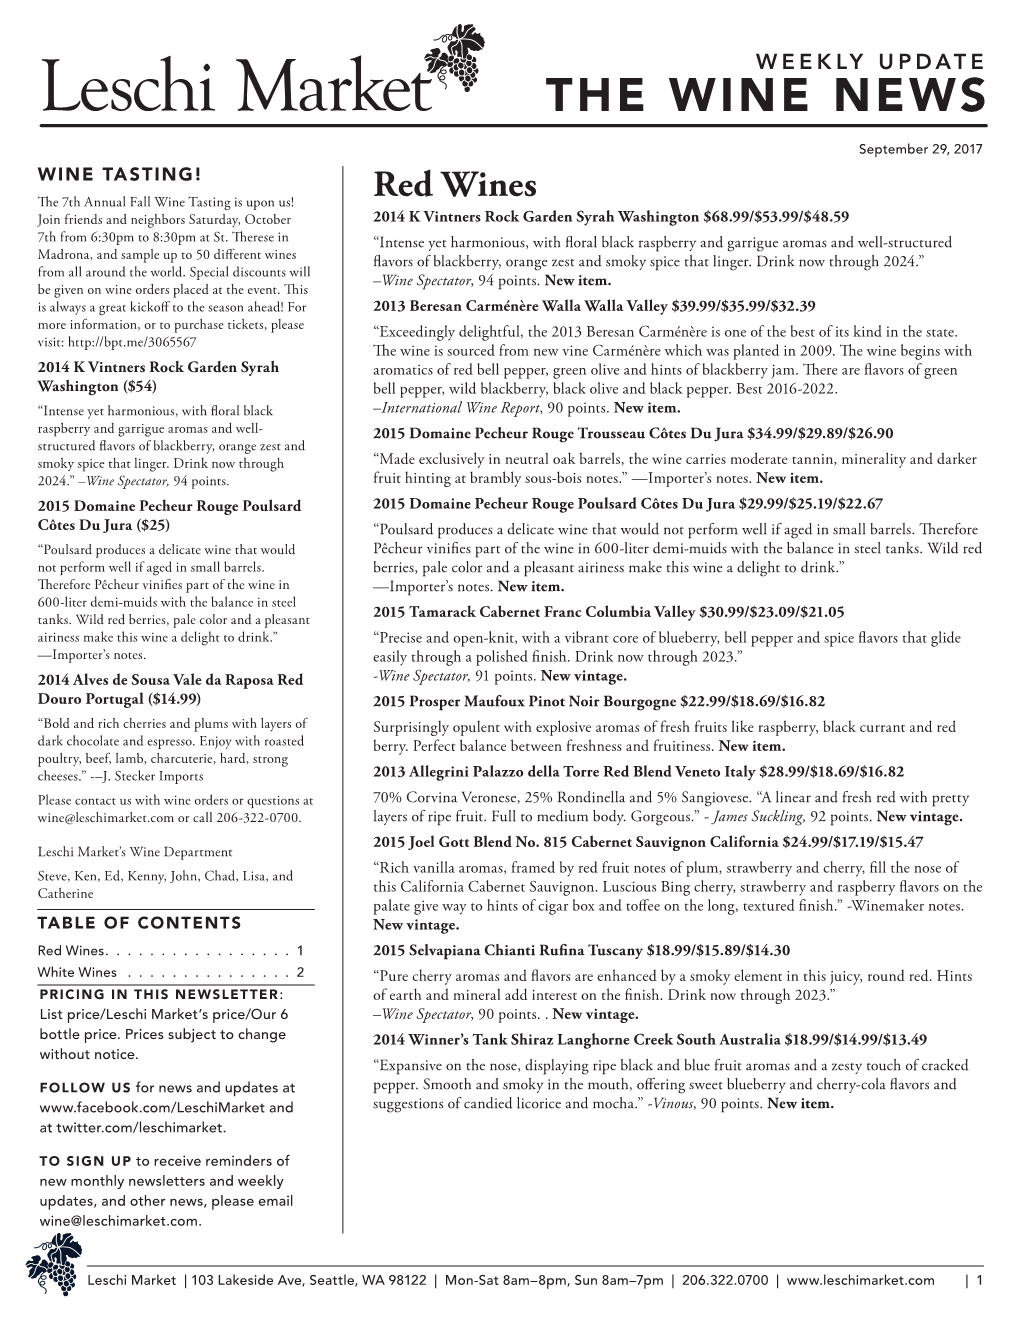 The Wine News